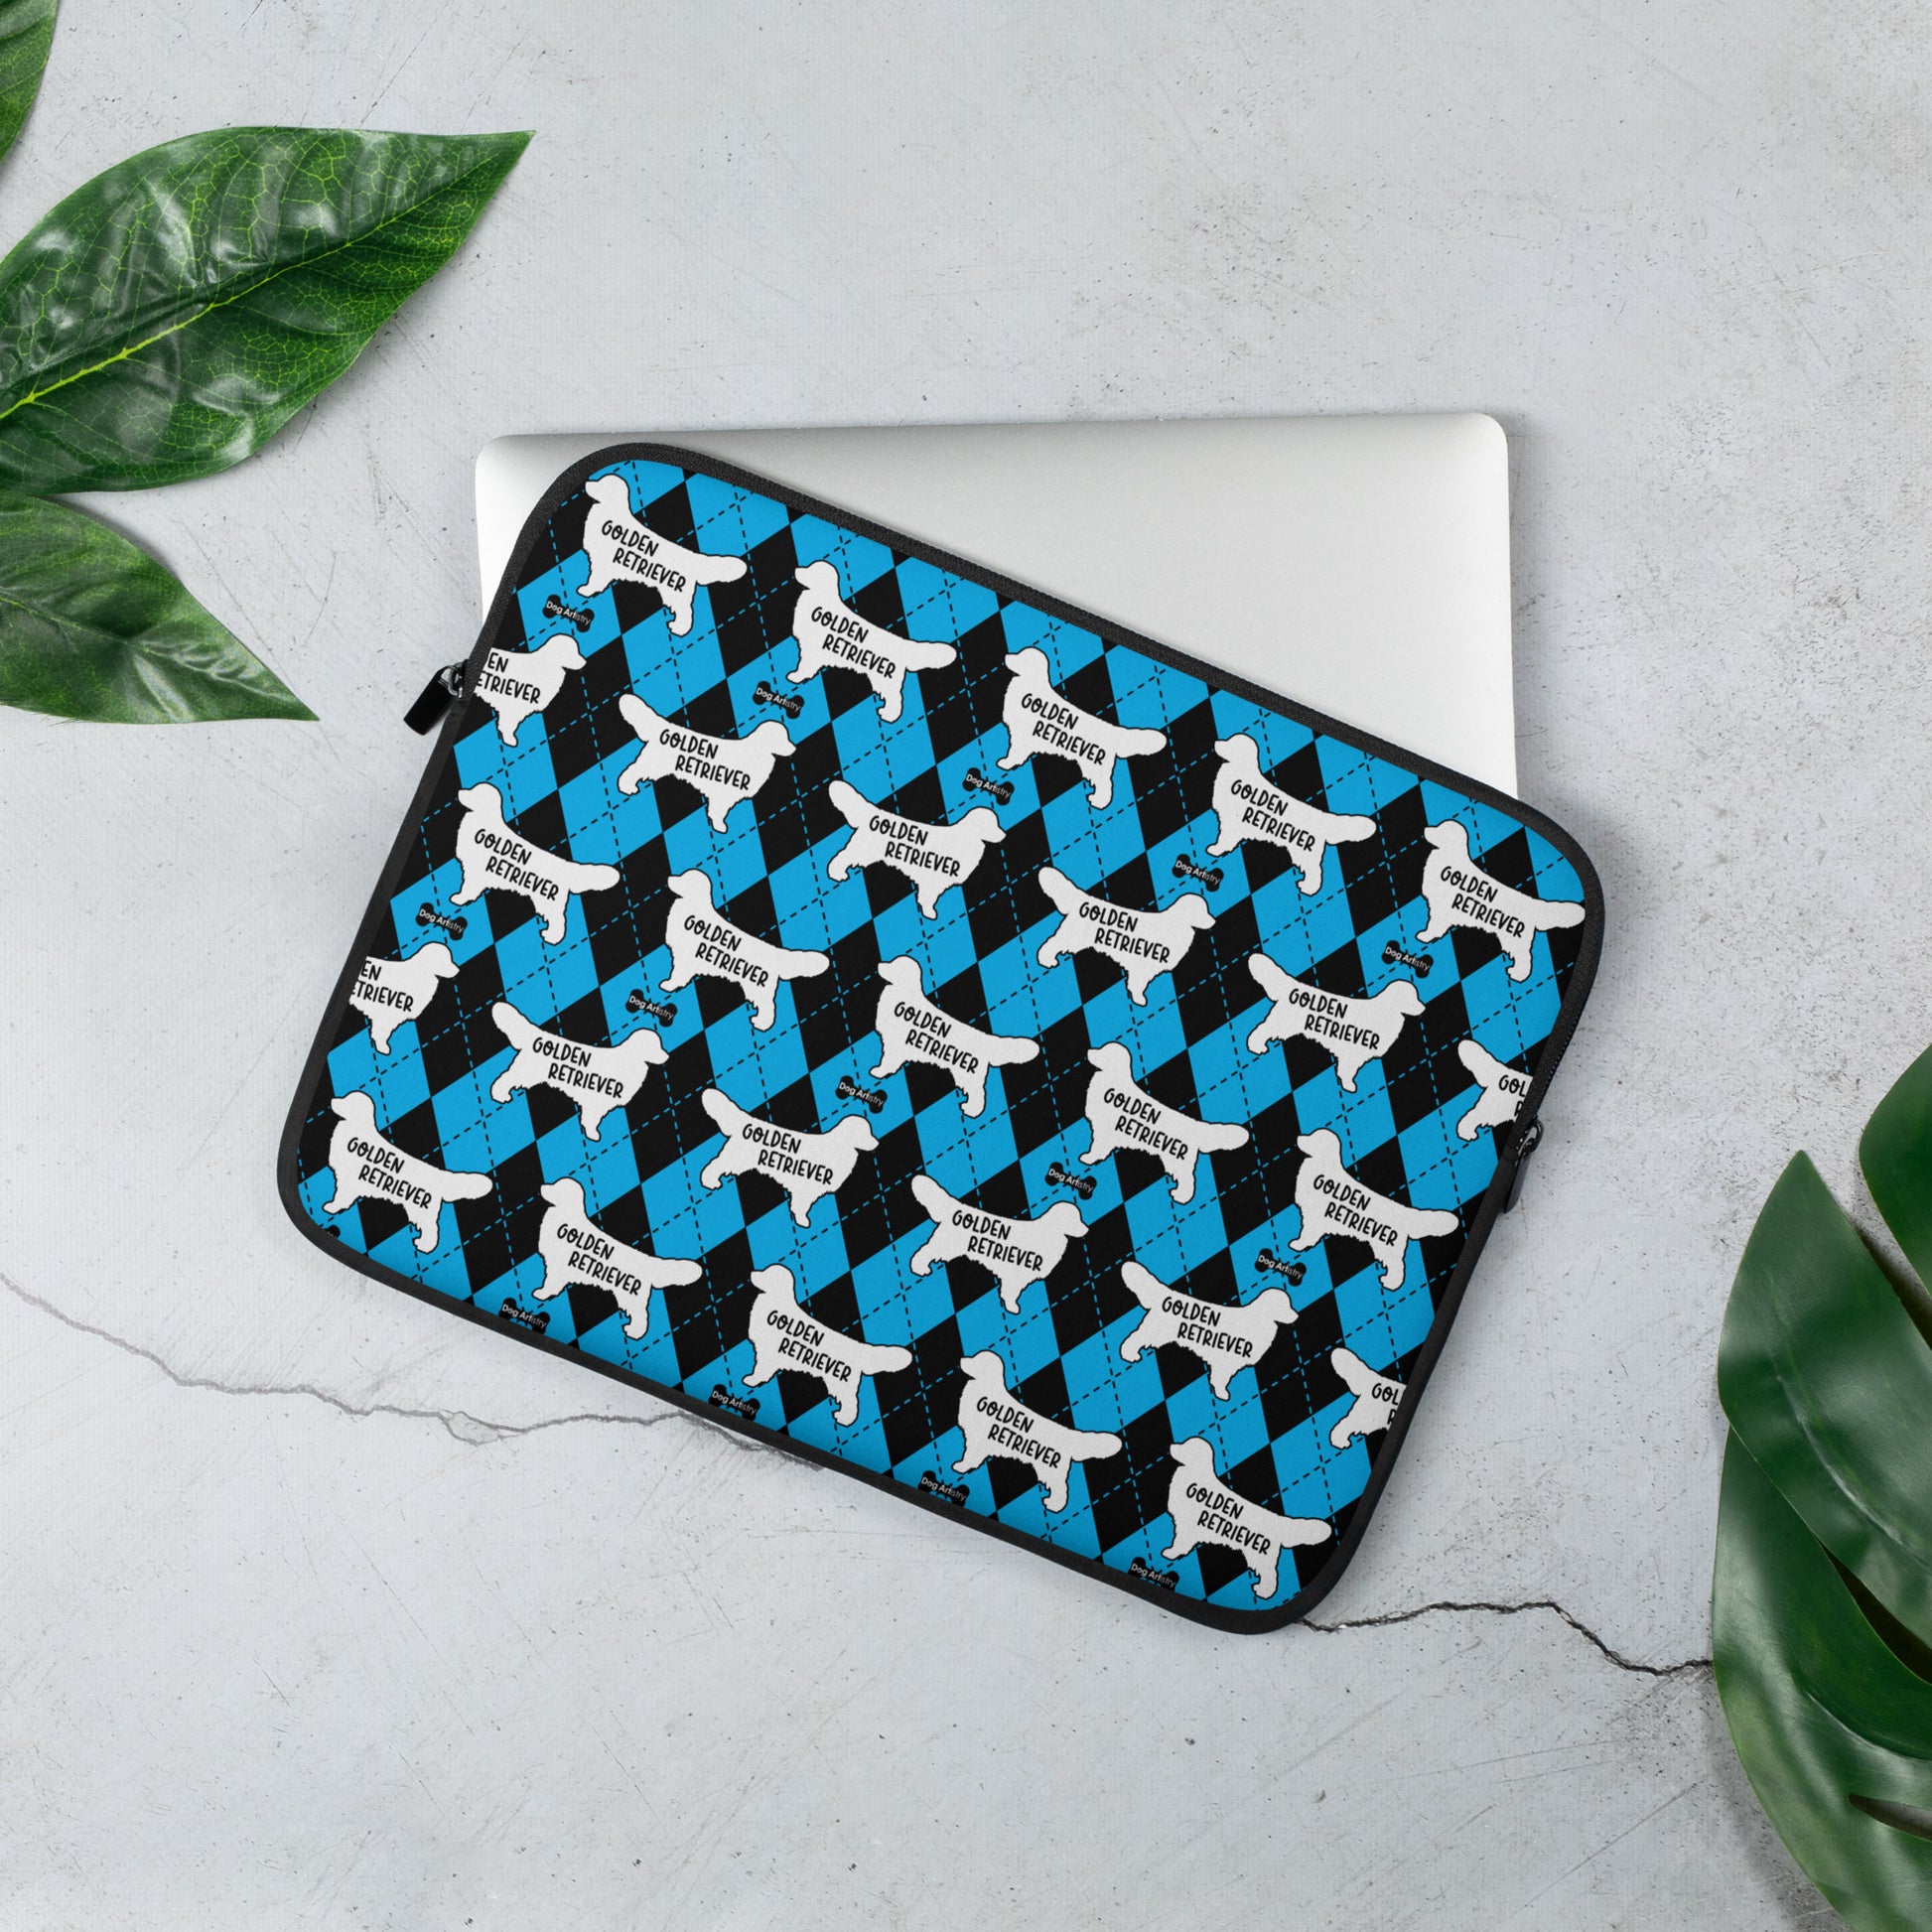 Golden Retriever blue and black argyle laptop sleeve by Dog Artistry